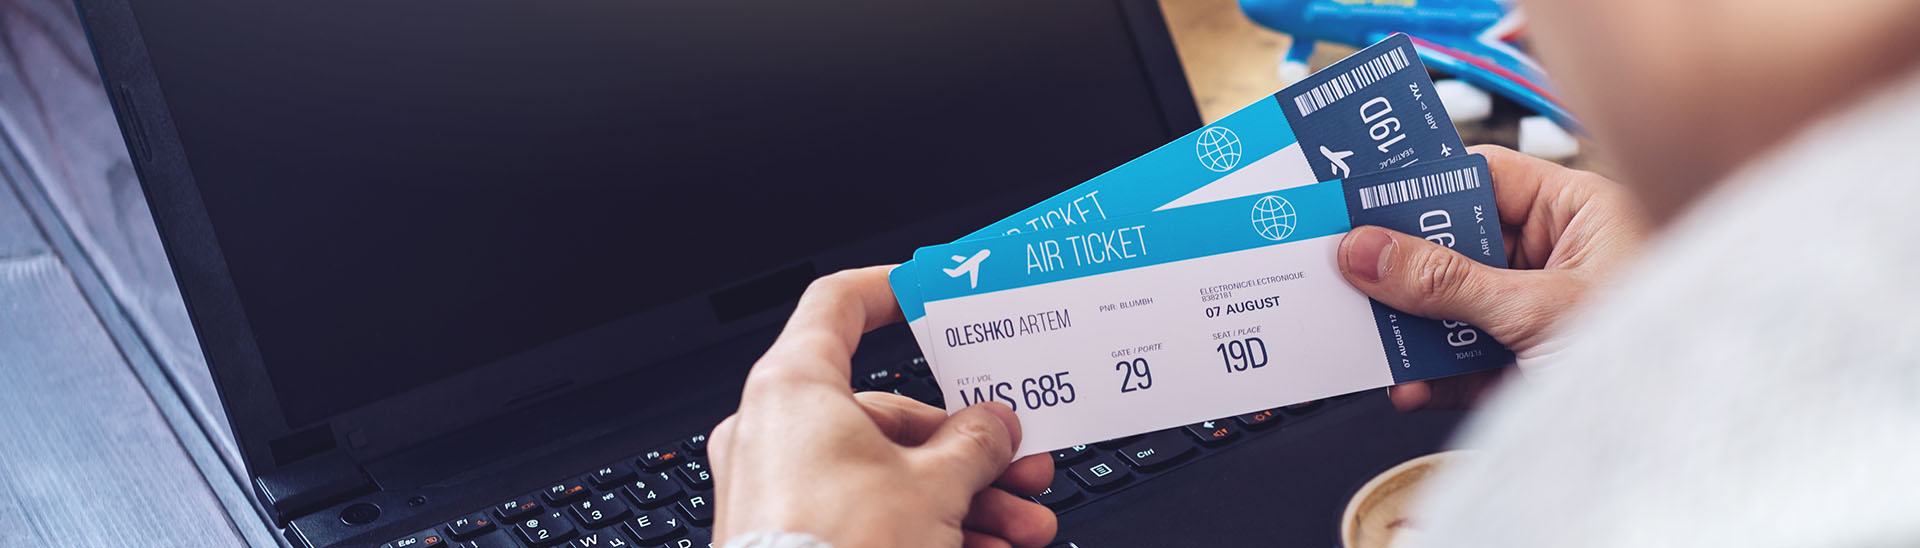 How to Get Cheap Flight Tickets